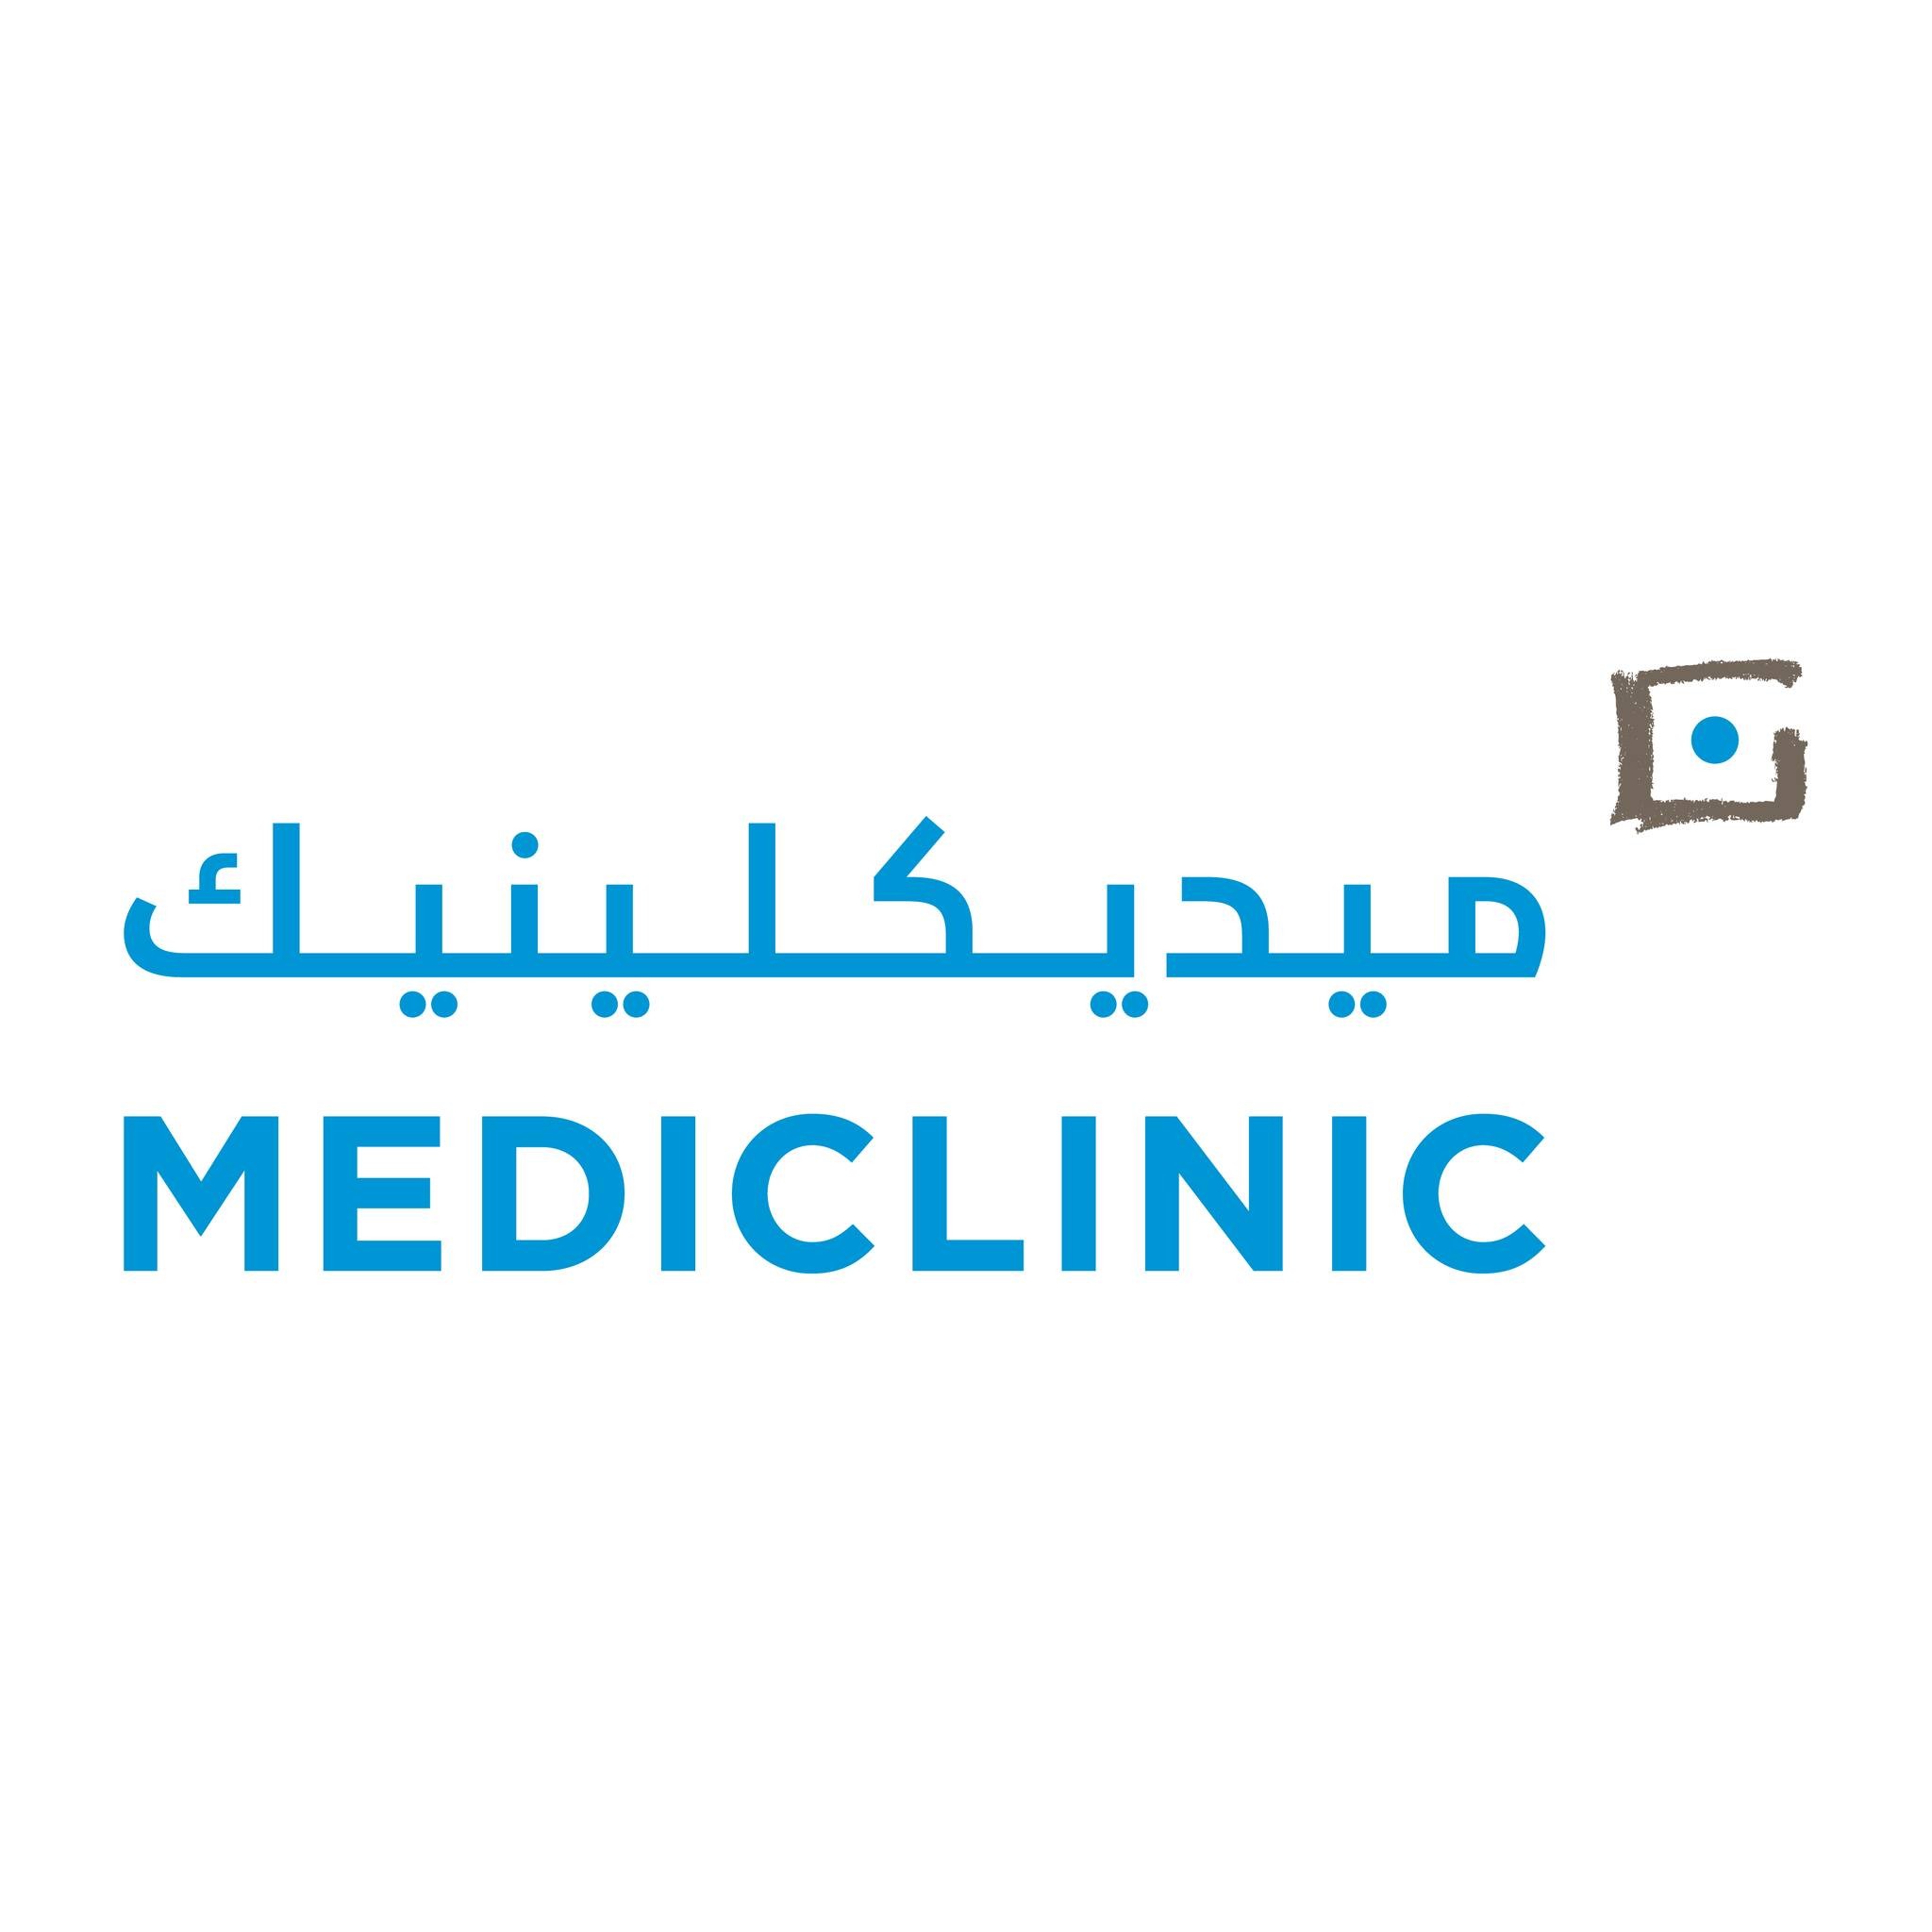 Mediclinic - Deira 